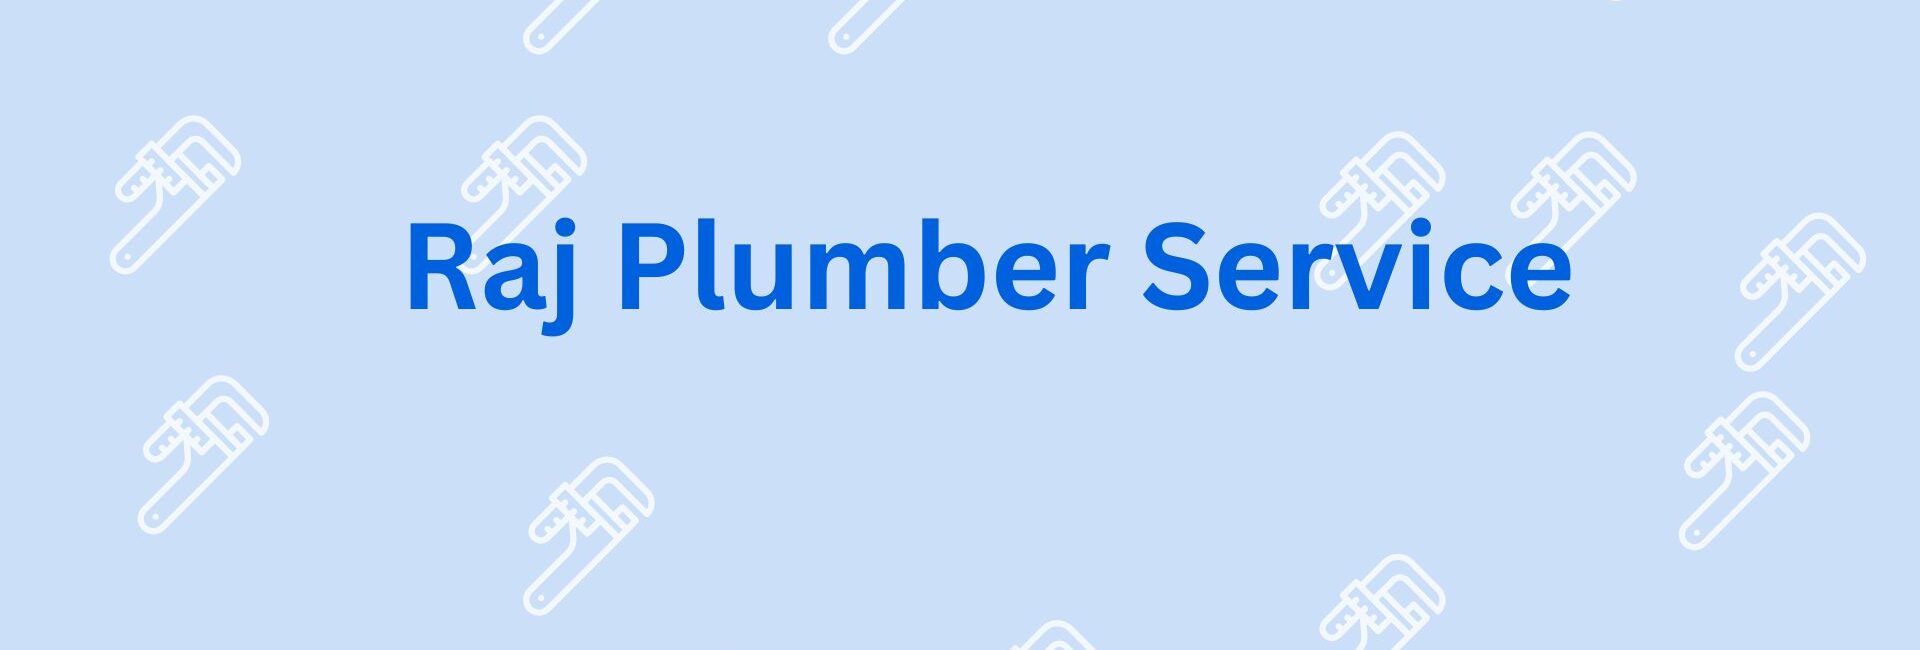 Raj Plumber Service - Plumber Service in Noida